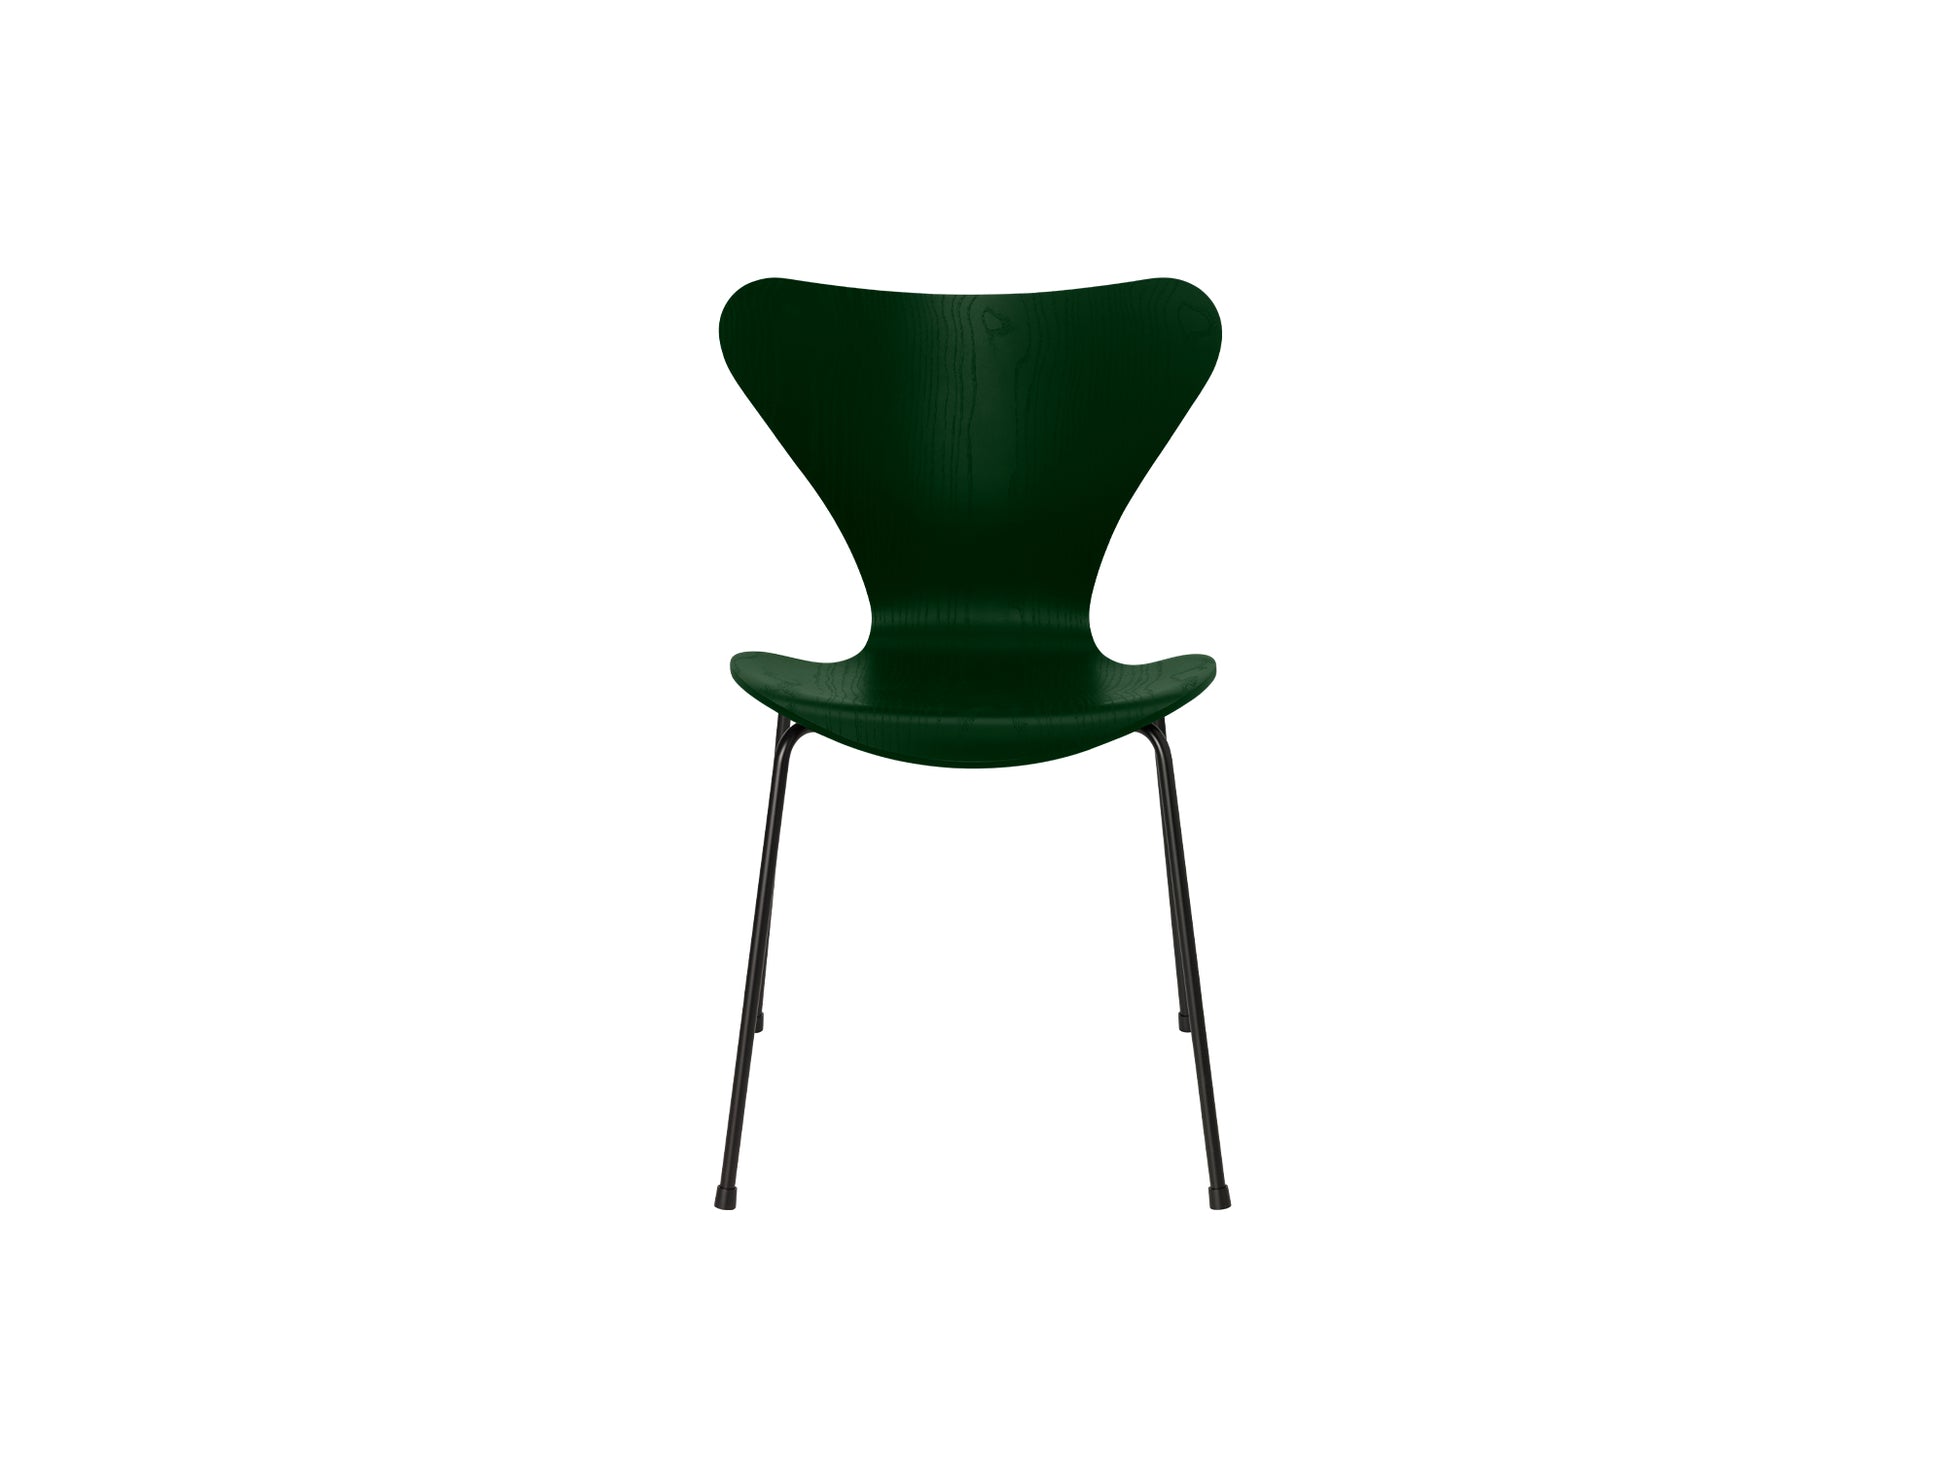 Series 7™ 3107 Dining Chair by Fritz Hansen - Evergreen Coloured Ash Veneer Shell / Black Steel